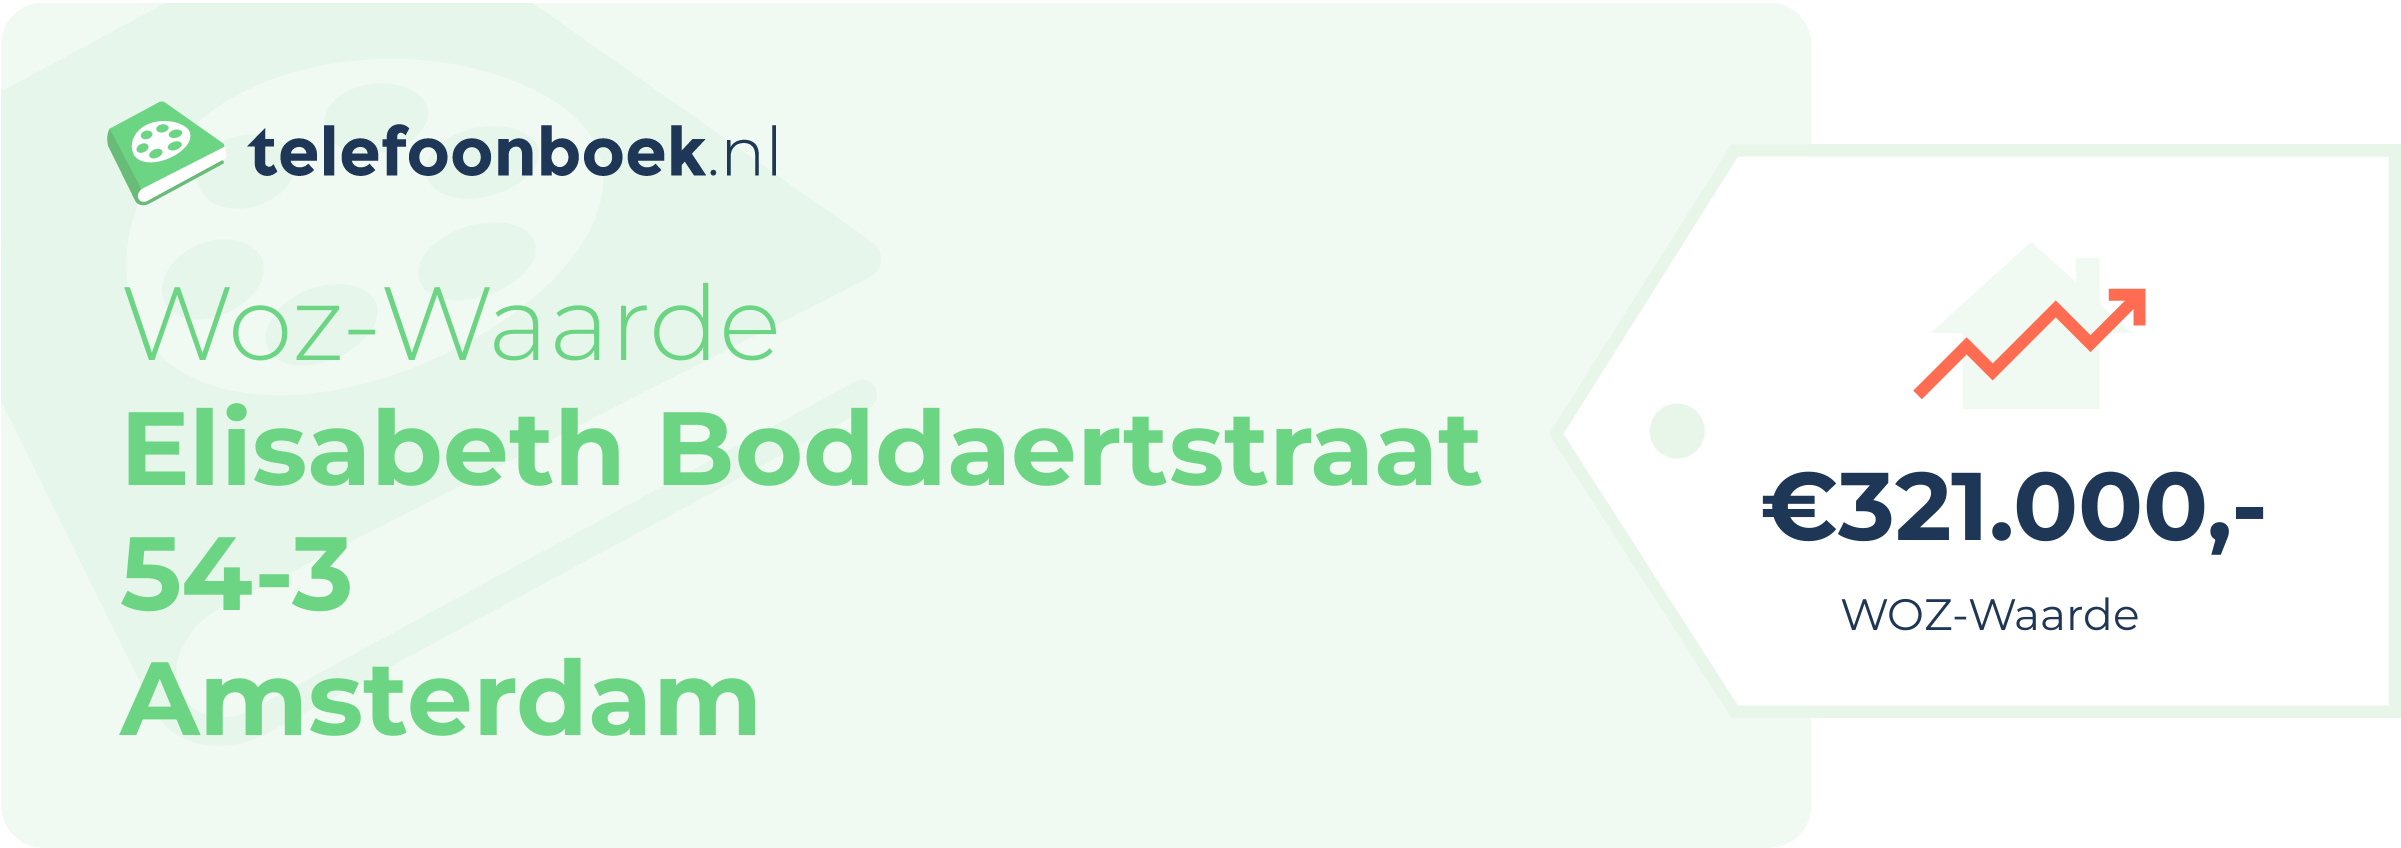 WOZ-waarde Elisabeth Boddaertstraat 54-3 Amsterdam